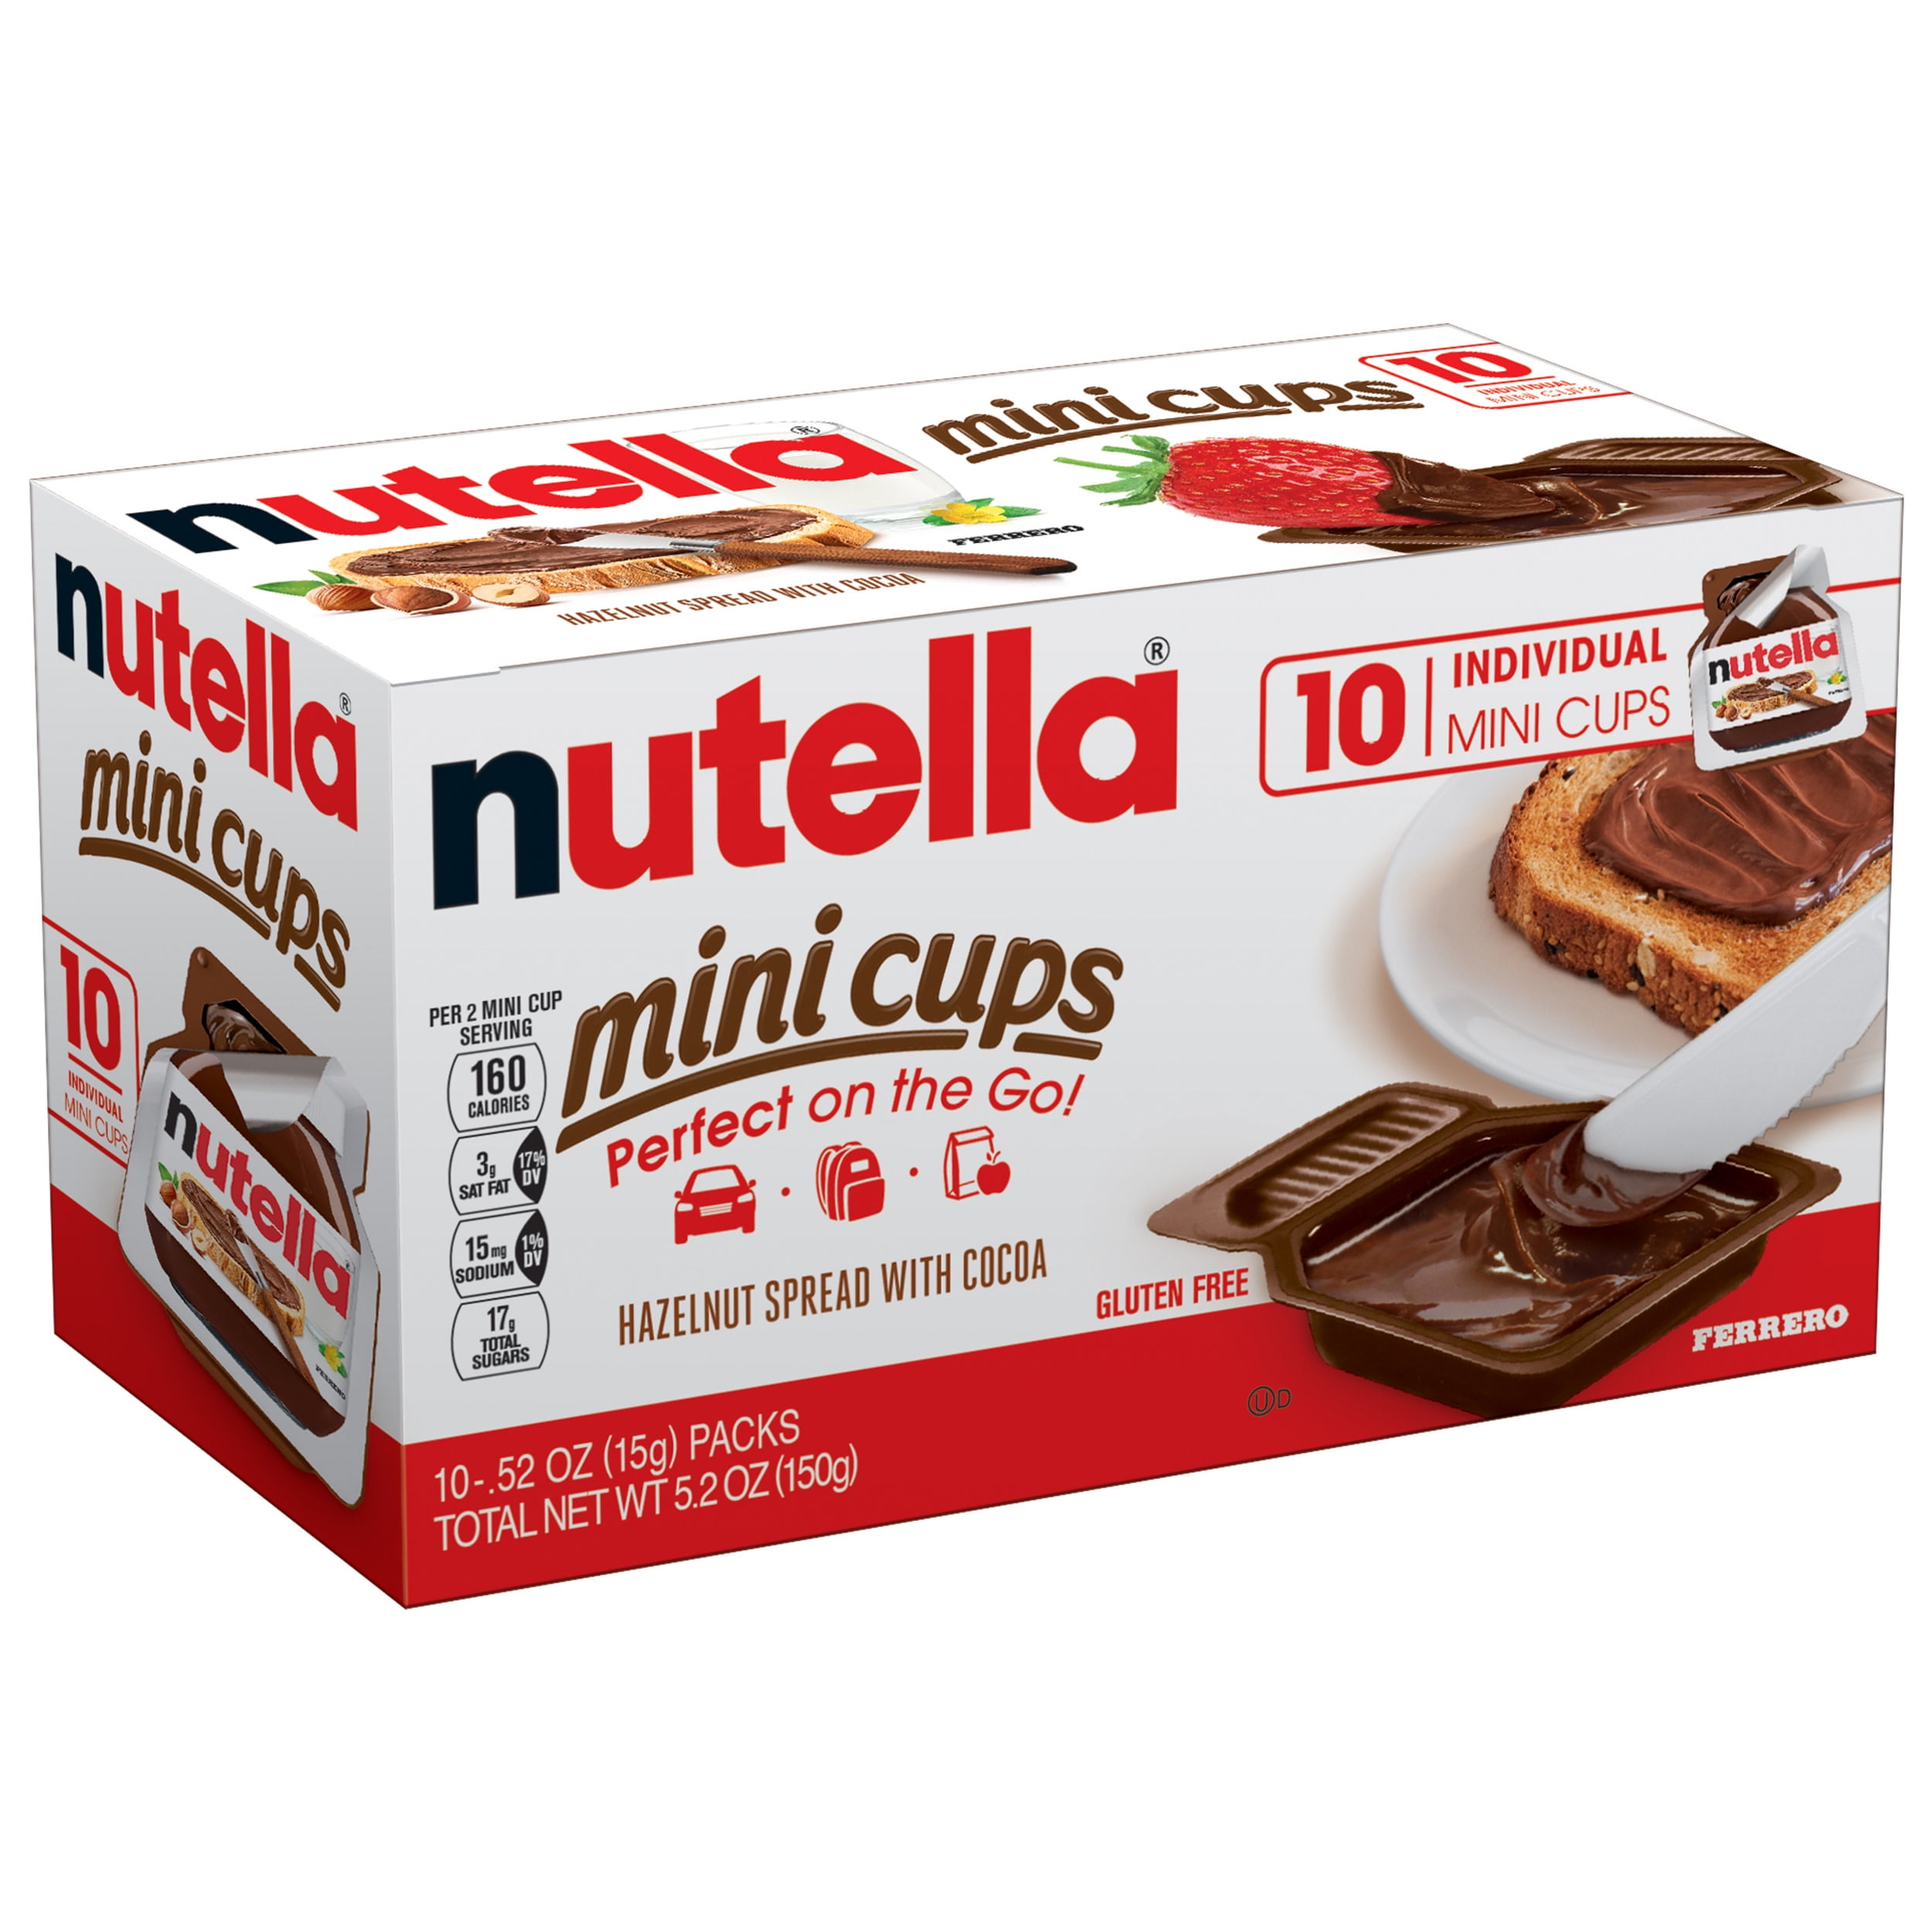 Buy Nutella 10 Kg online